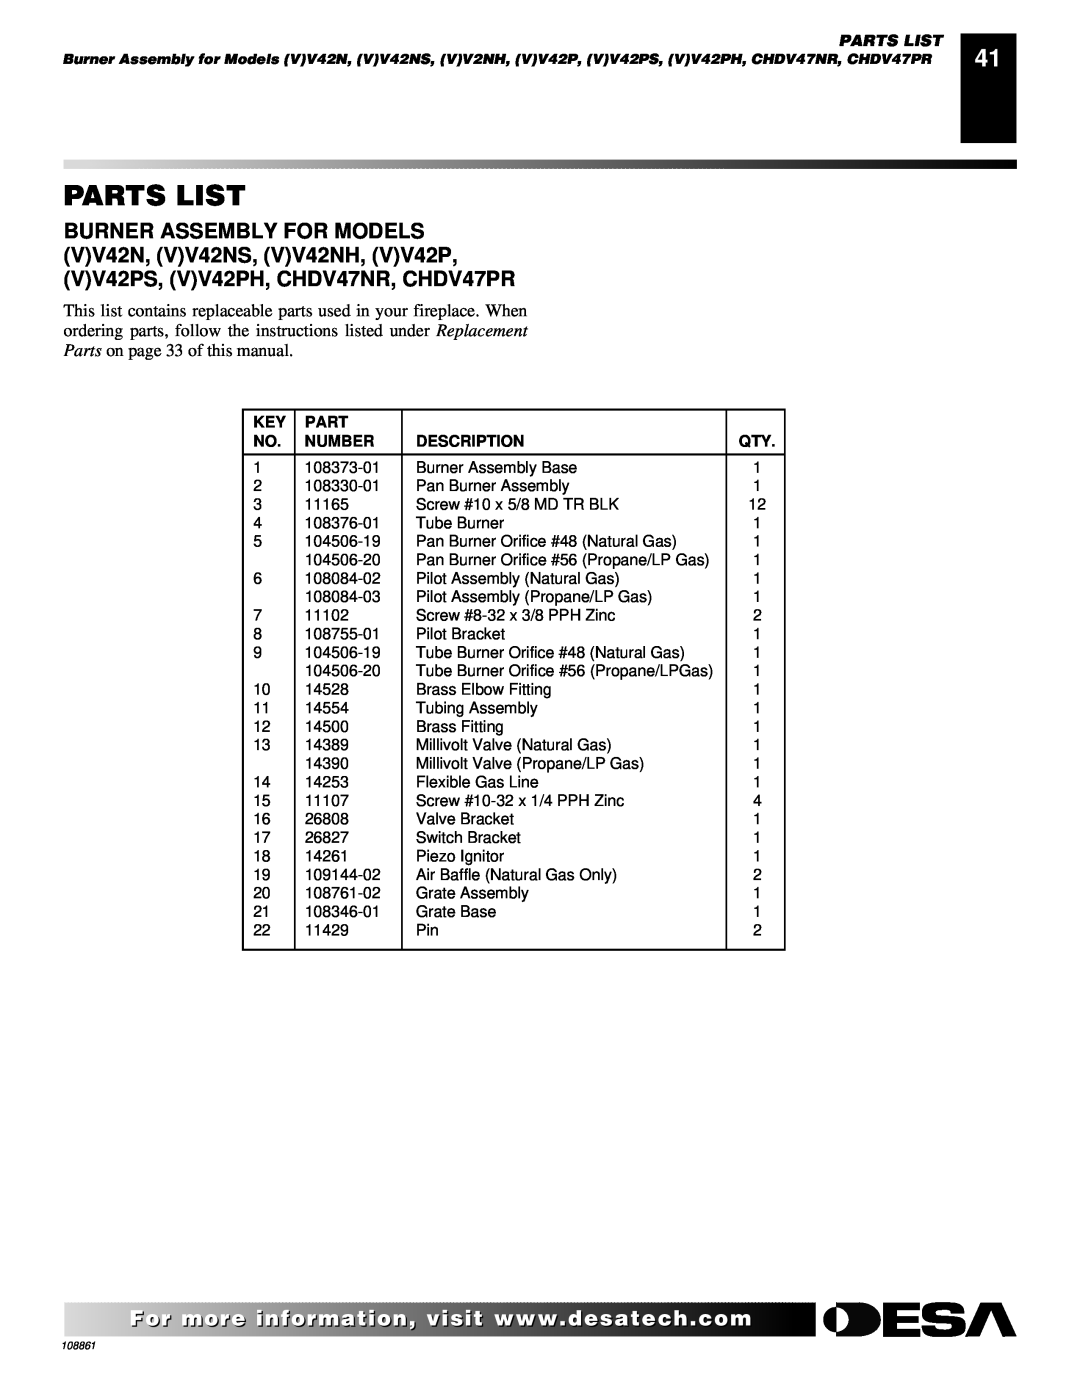 Desa CHDV47PR, (V)V36N, CHDV47NR installation manual Parts List, 108373-01 